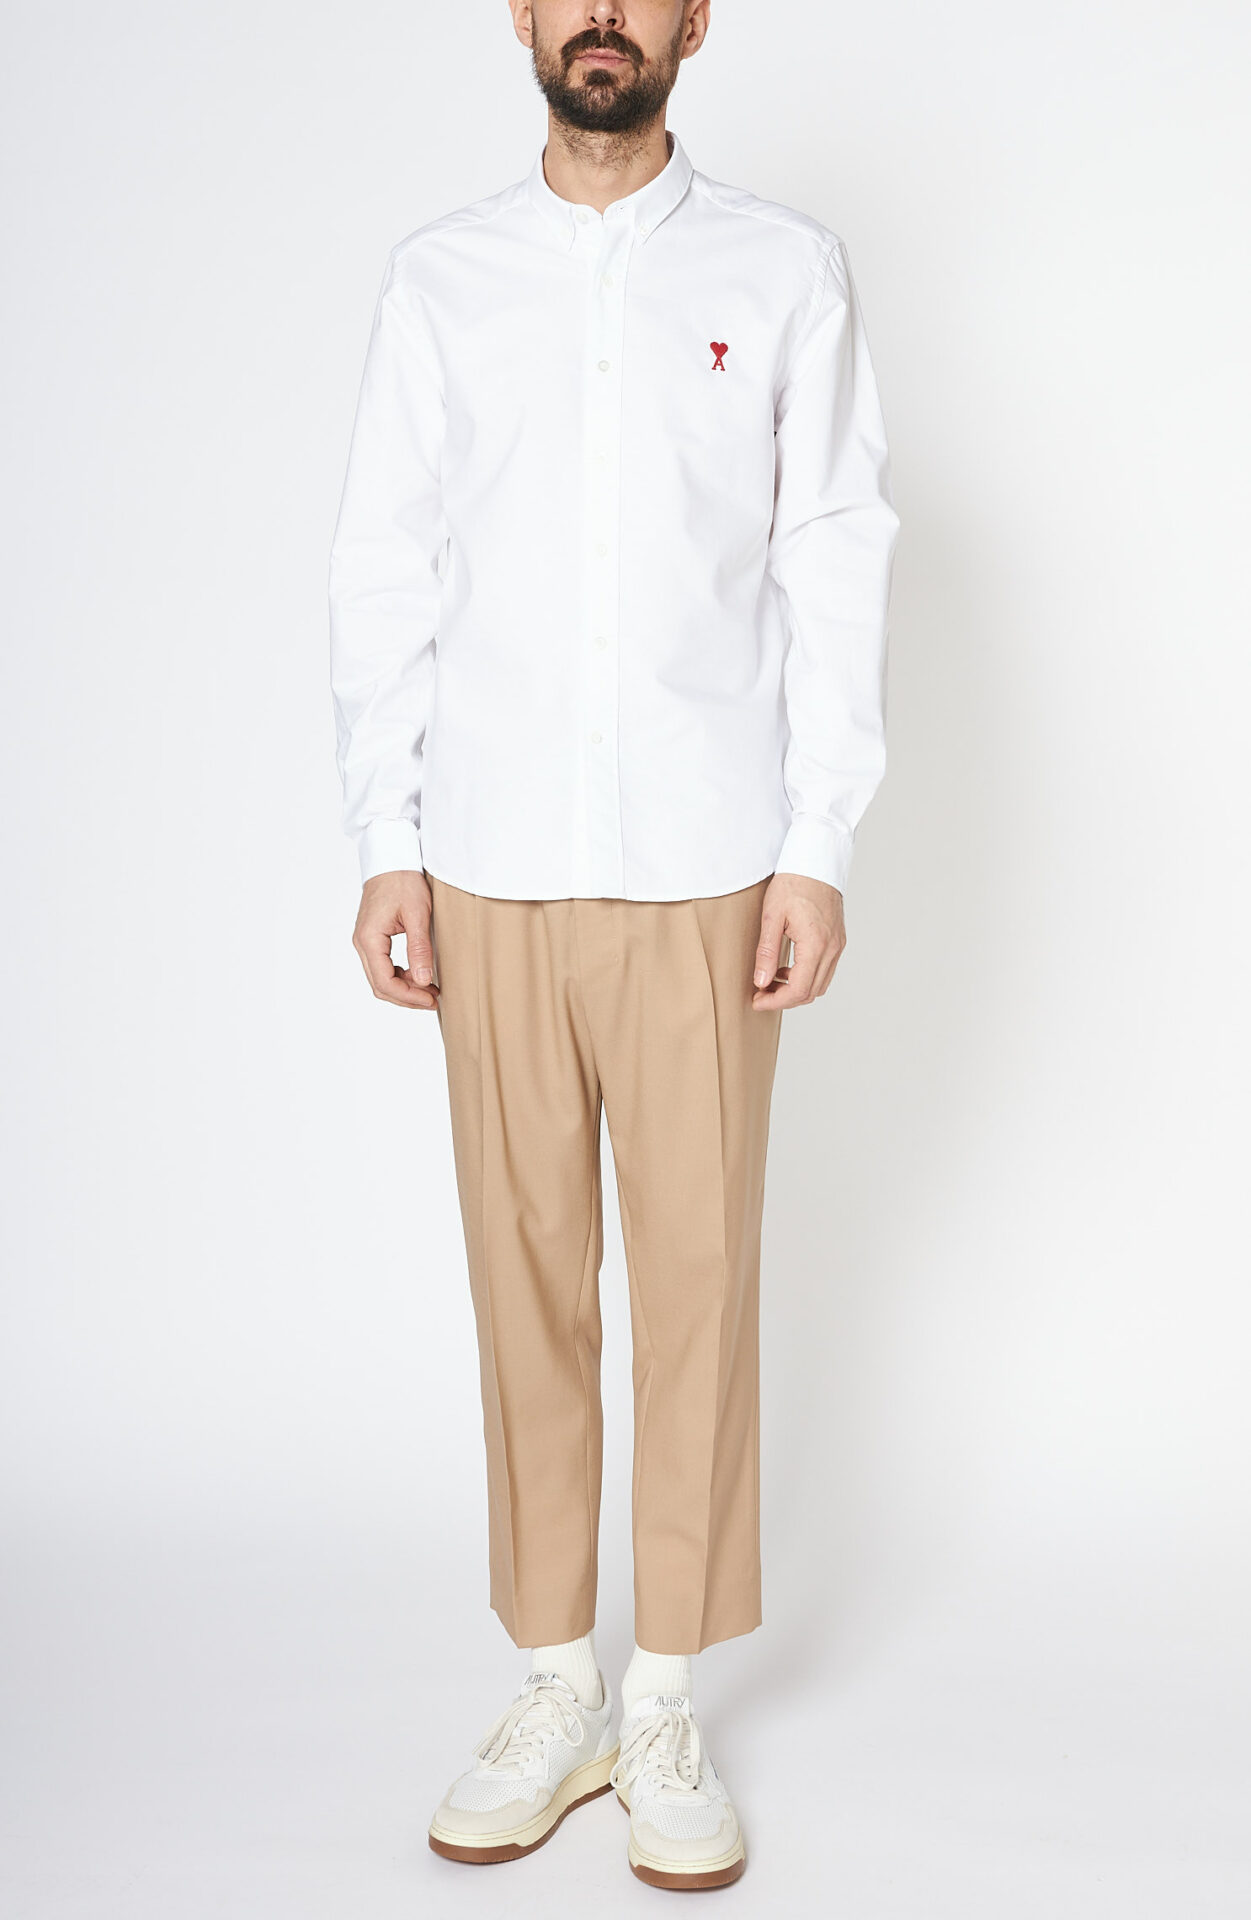 AMI Paris - White button down shirt with red heart - Schwittenberg